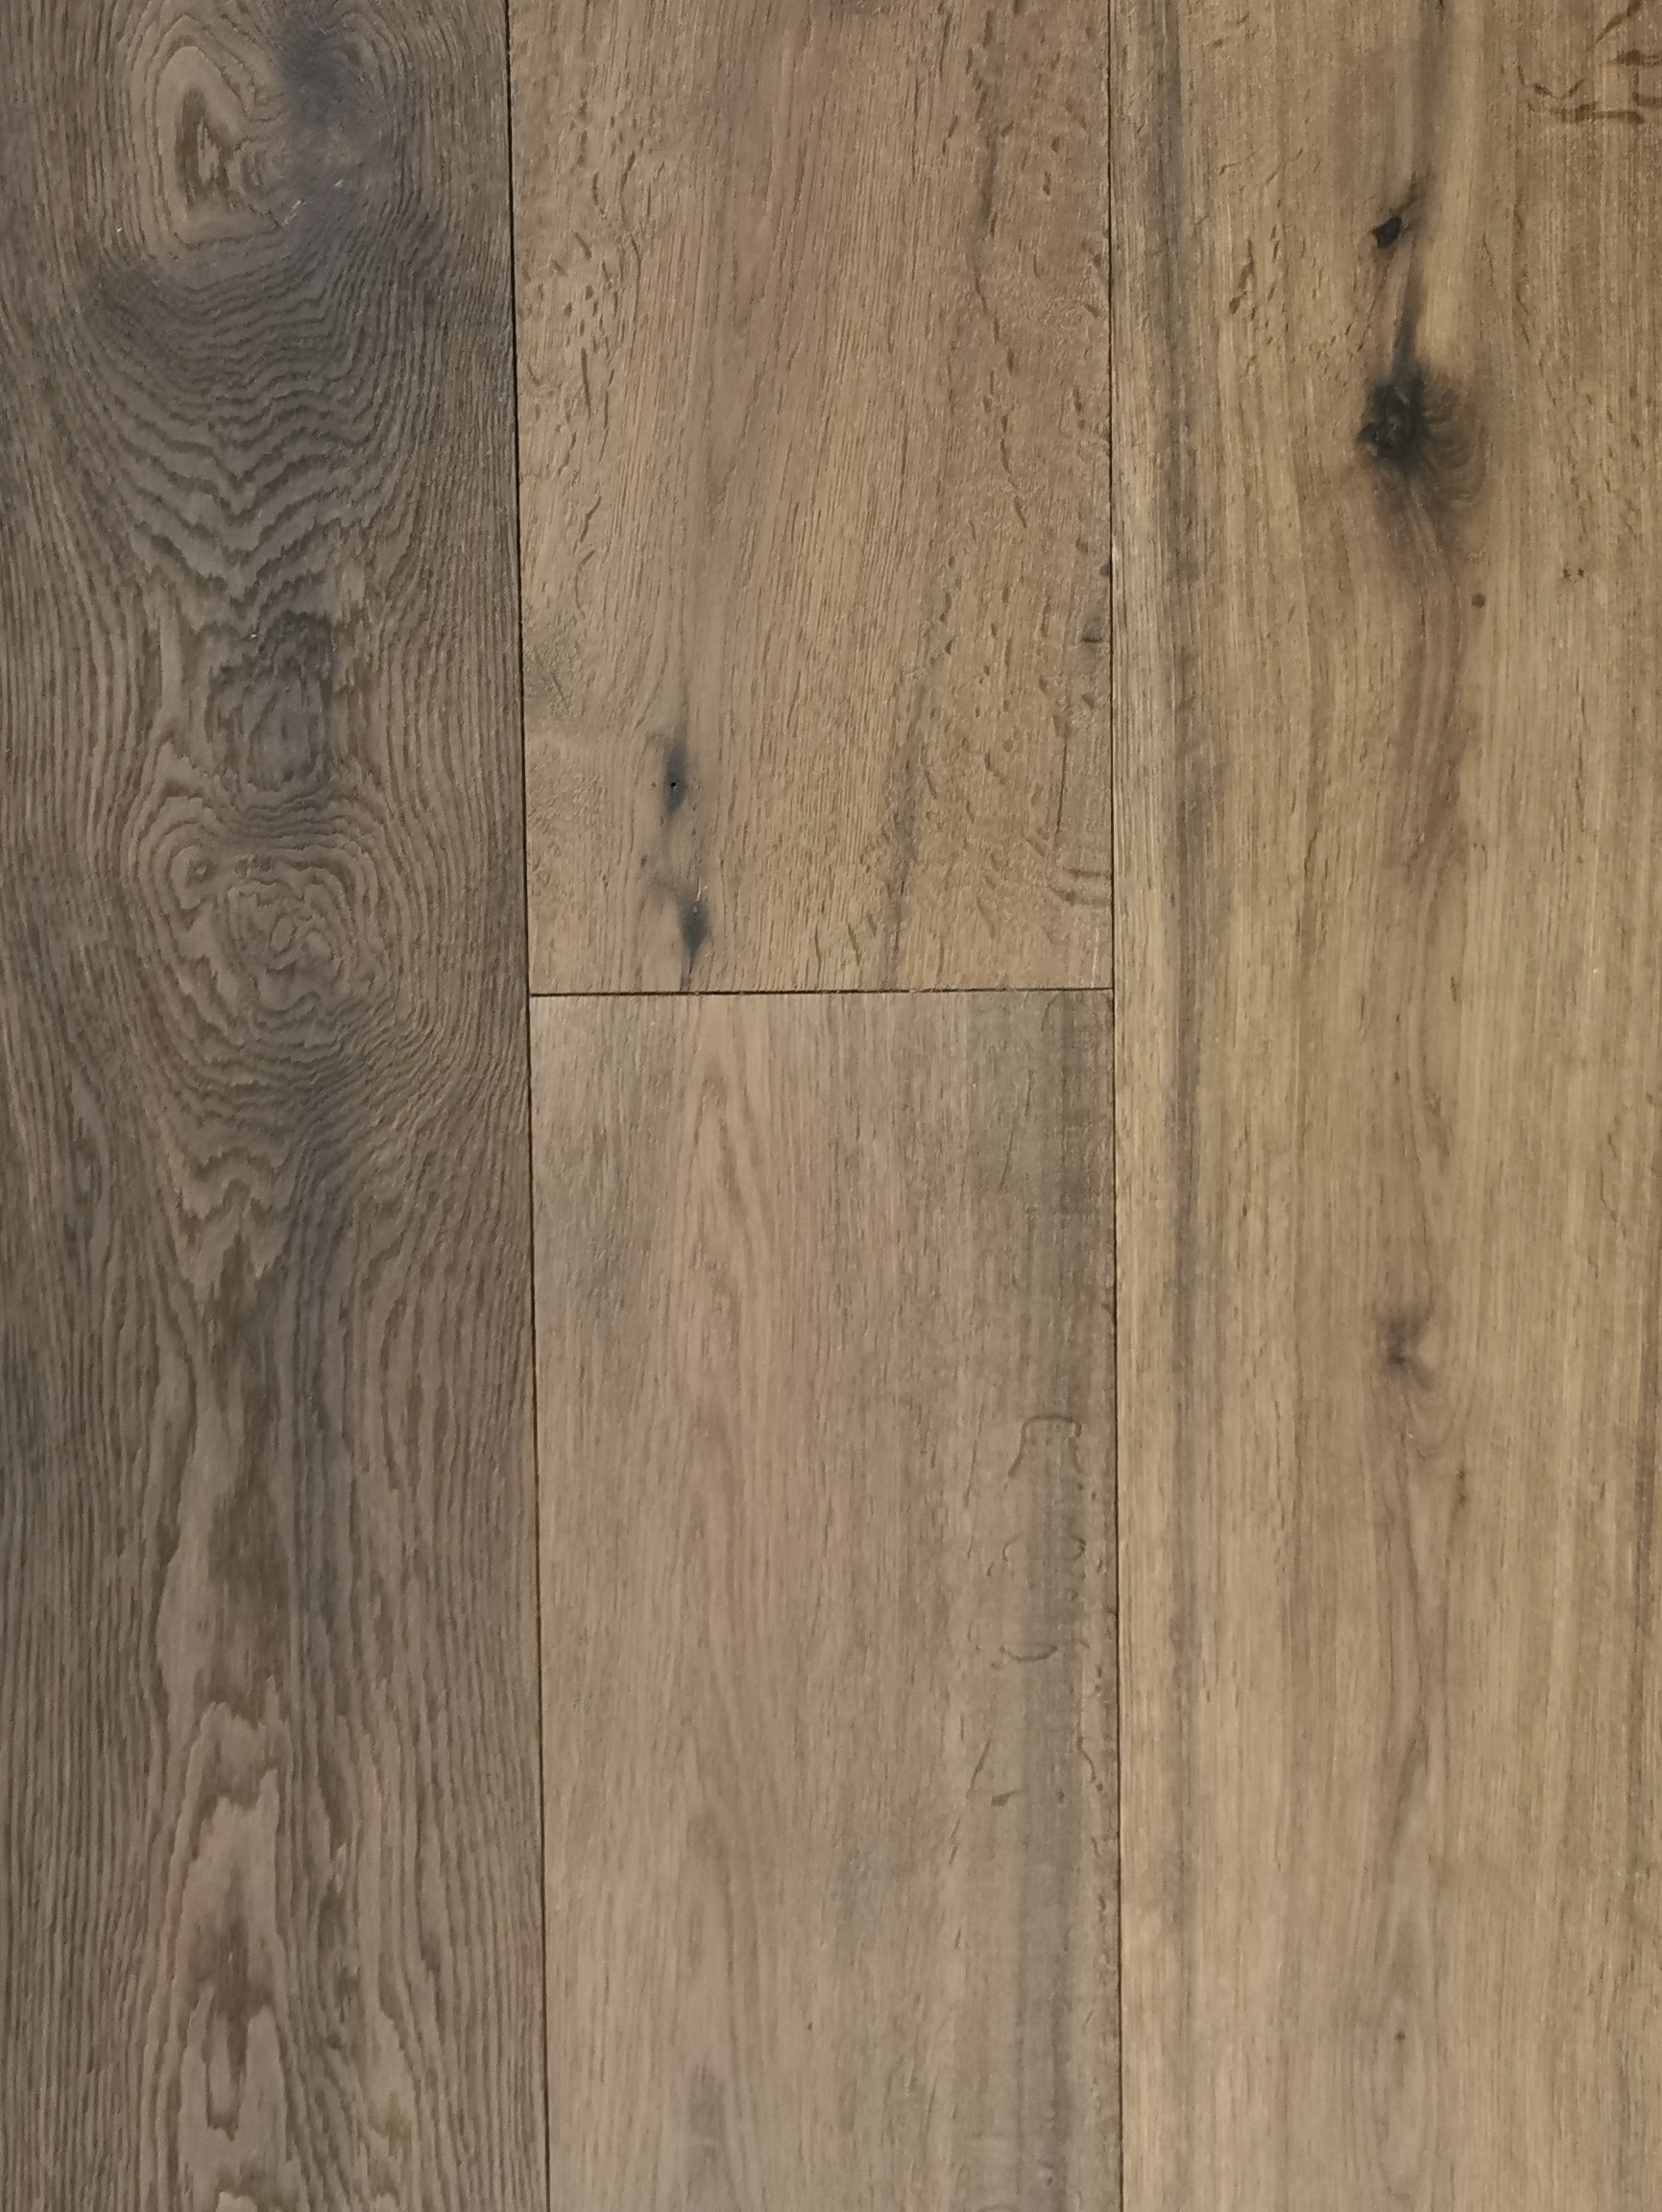 Northernest Flooring European White Oak, Long Length Engineered Hardwood Flooring